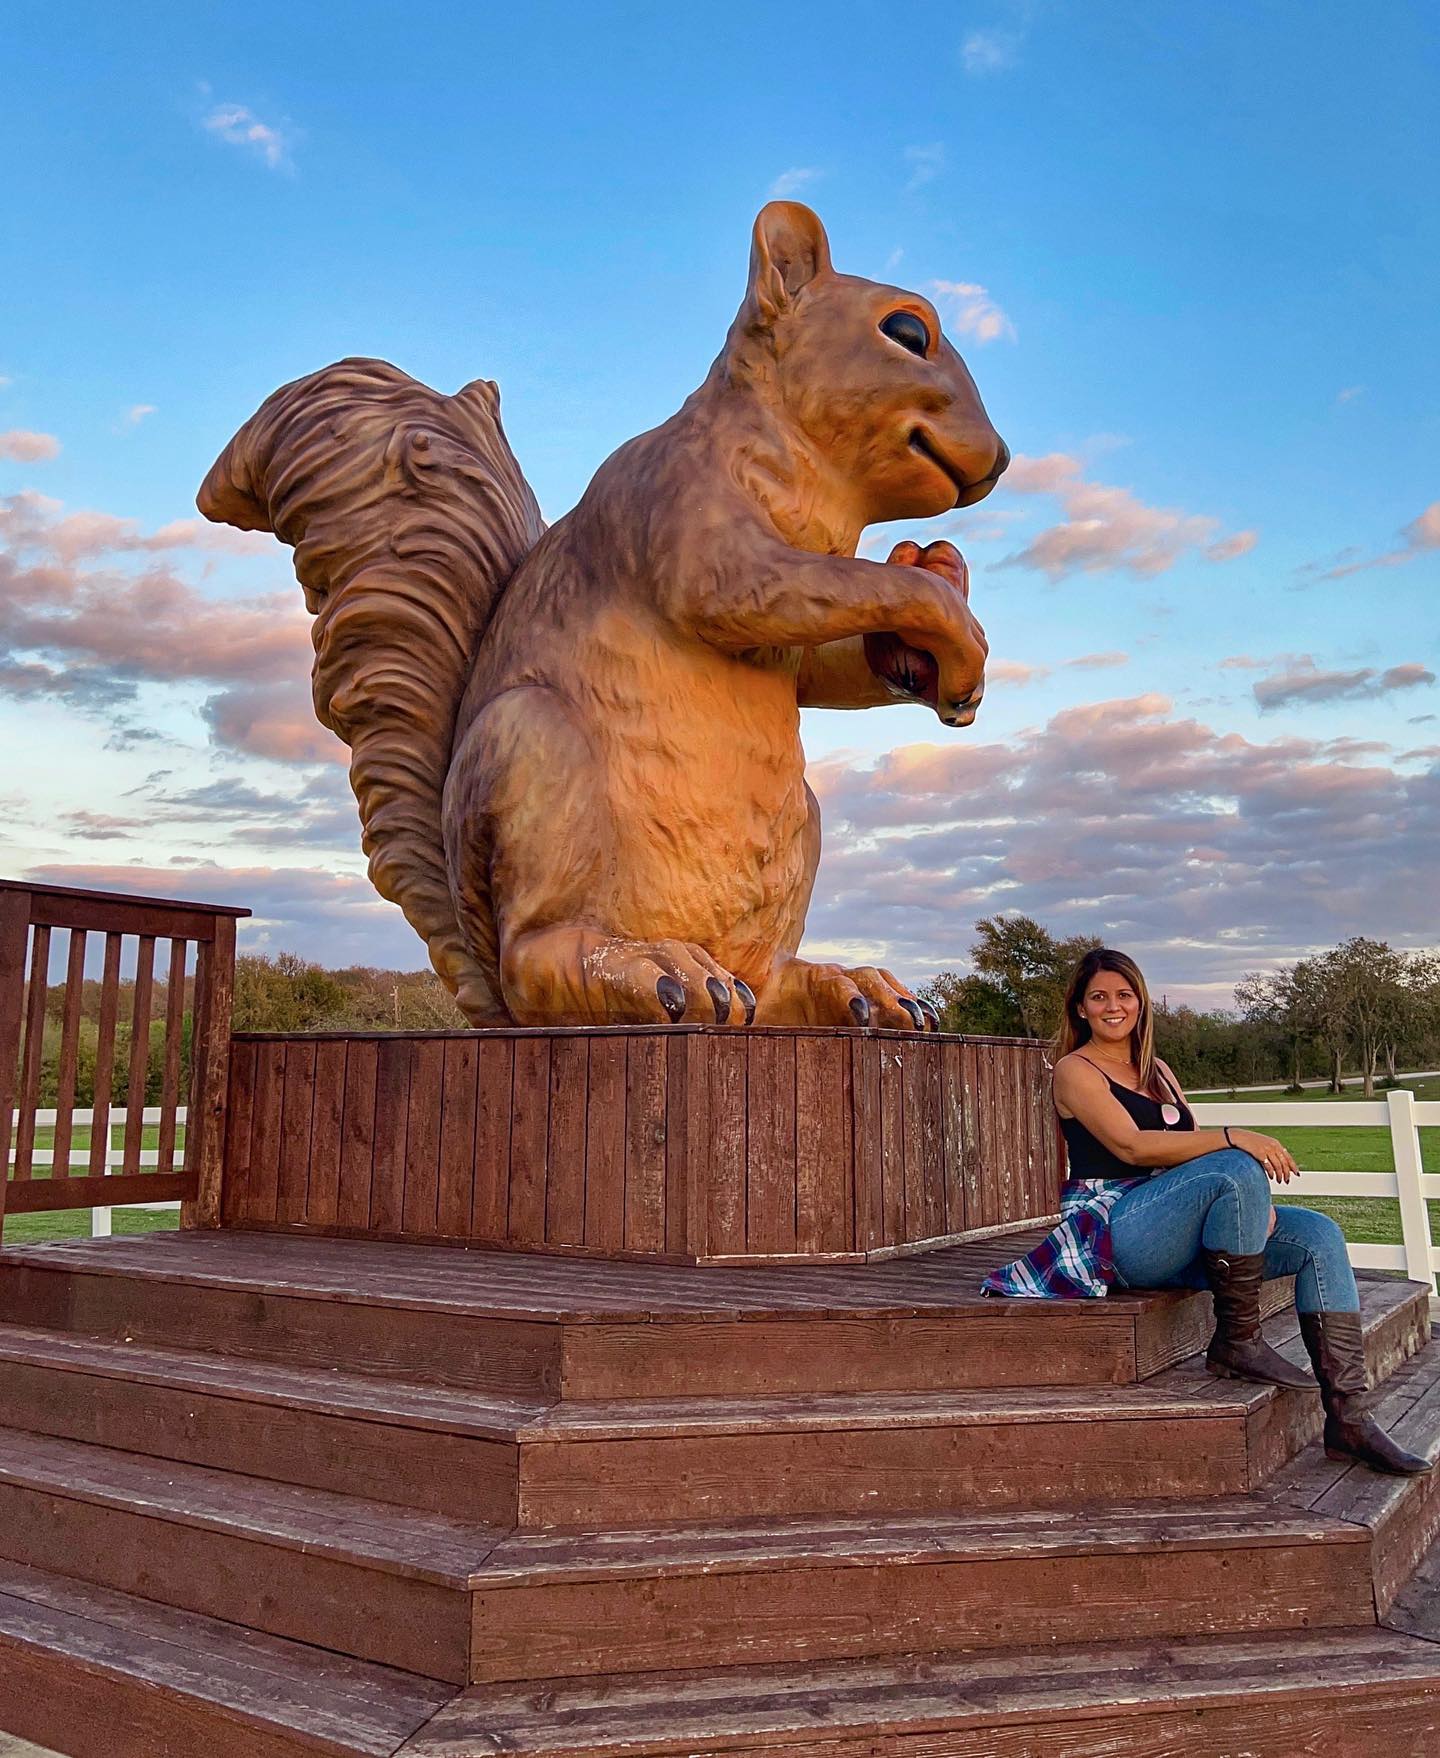 Largest squirrel sculpture: Cedar Creek, Texas, sets world record